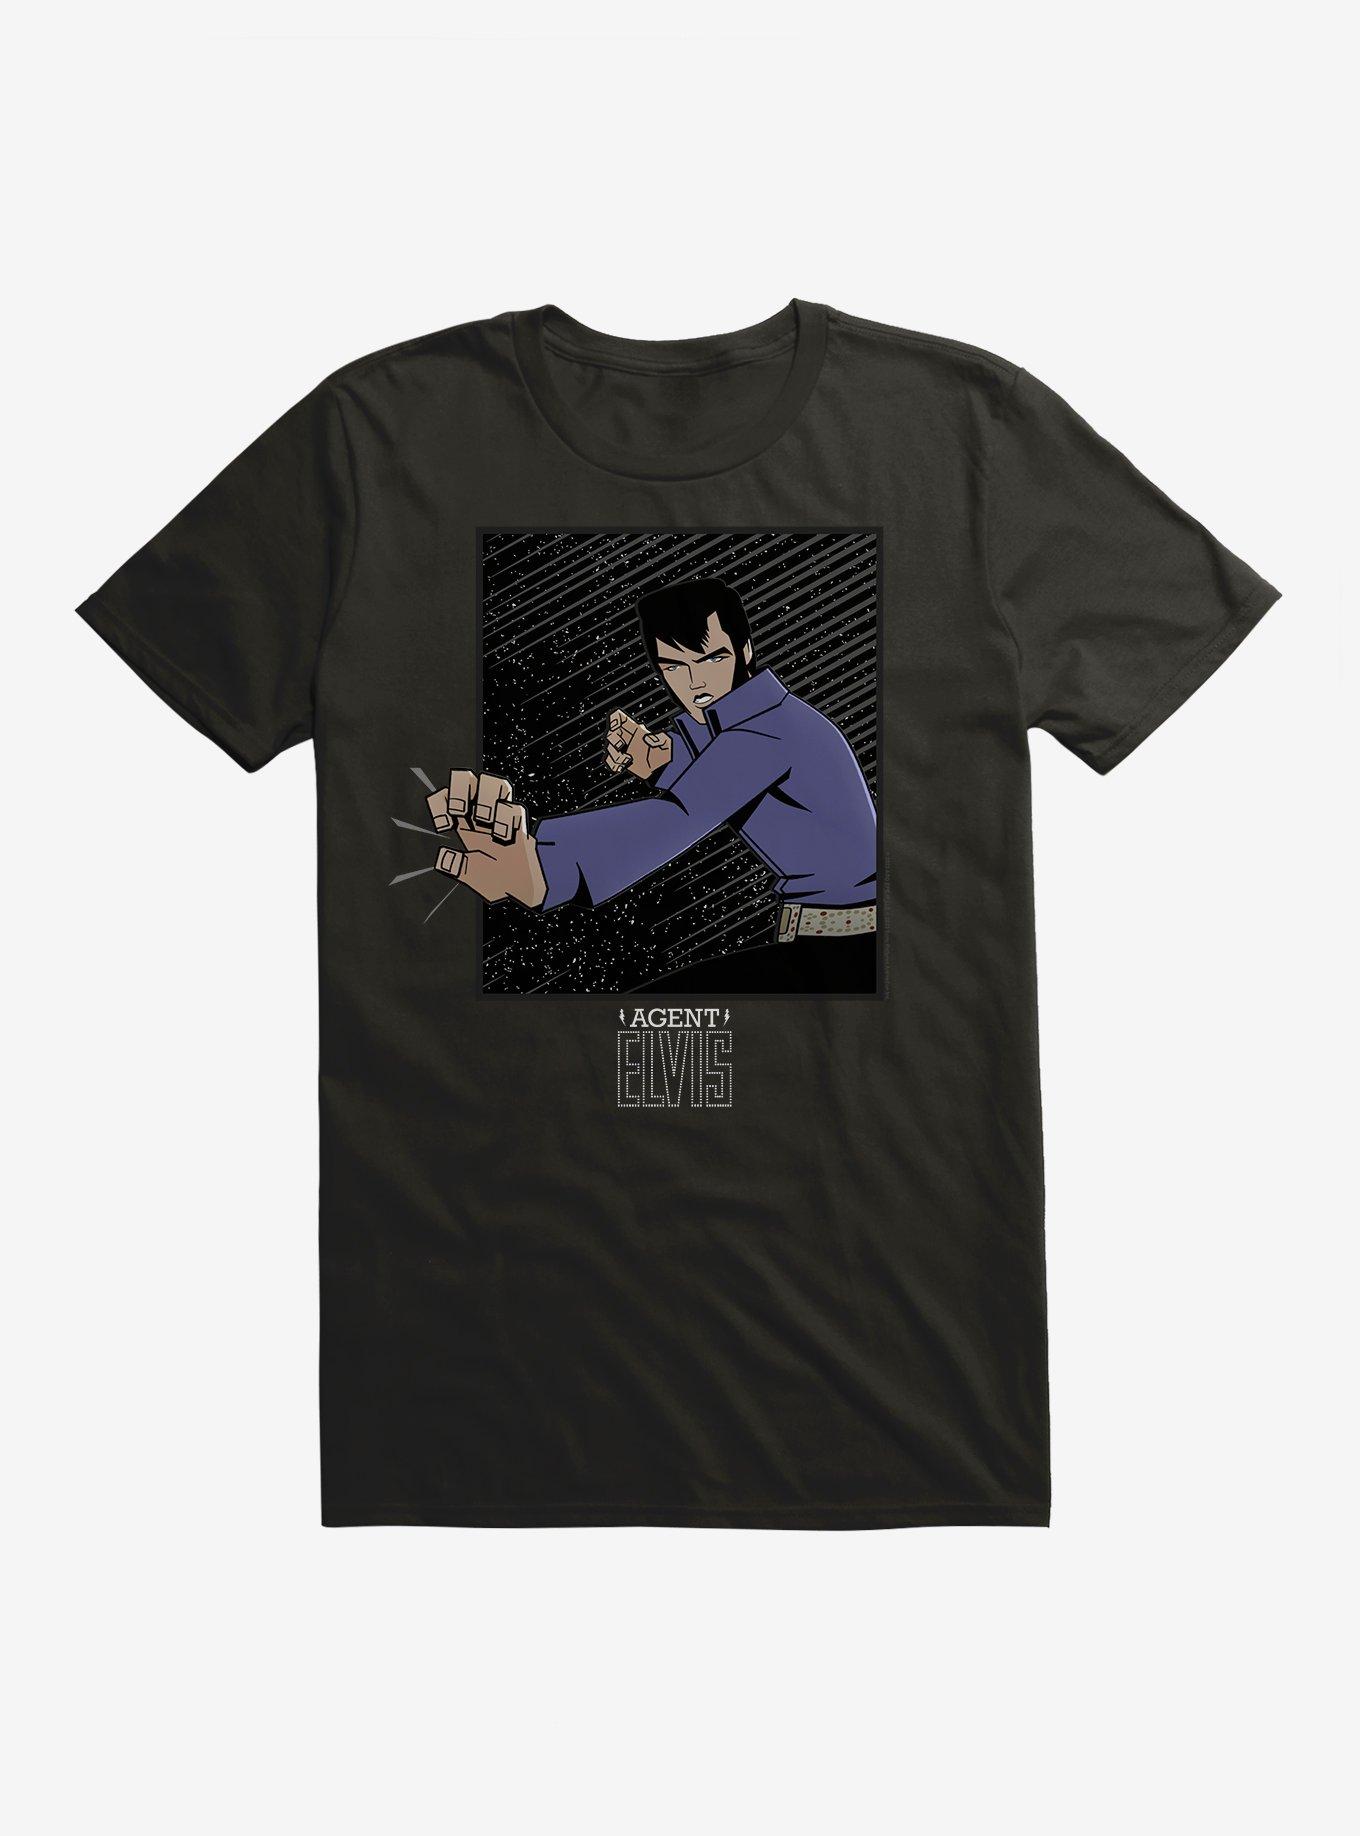 Agent Elvis Monkey Paw T-Shirt